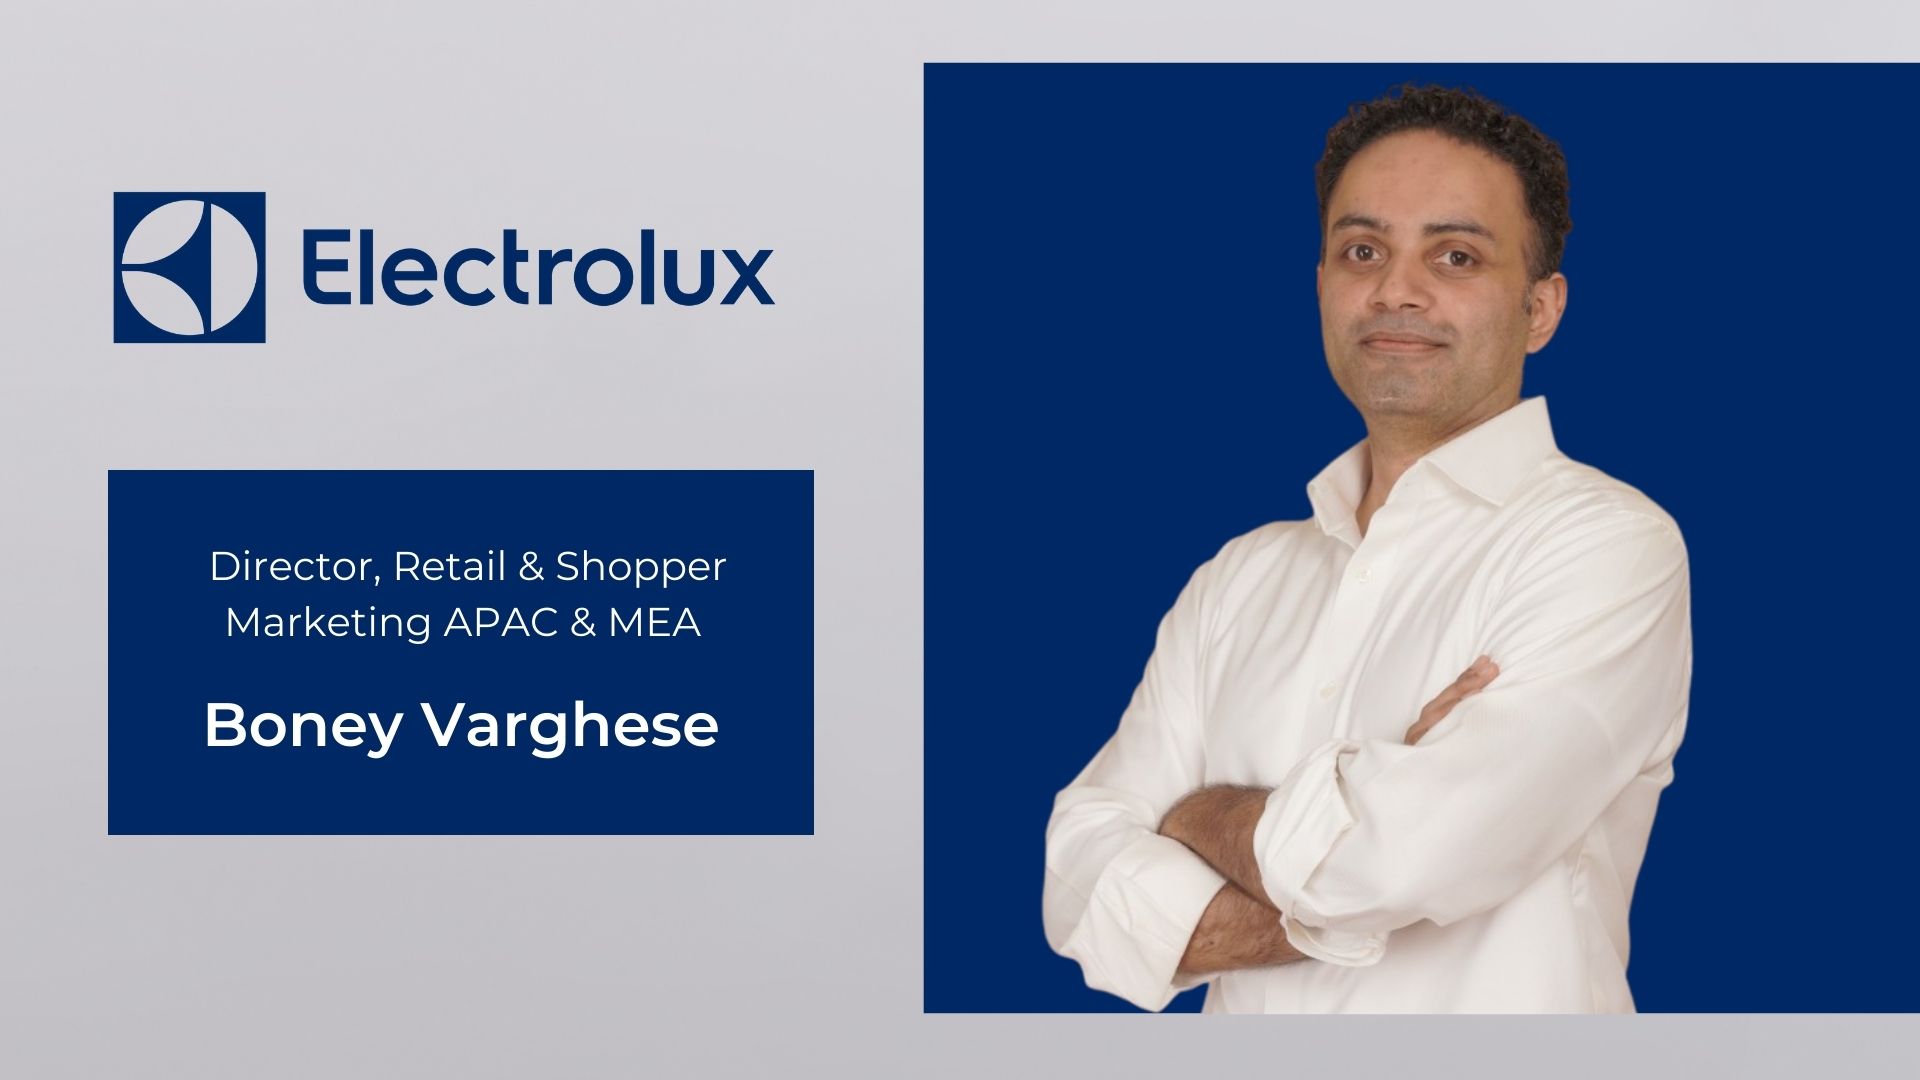  Boney Varghese, Director, of Retail & Shopper Marketing APAC & MEA at Electrolux